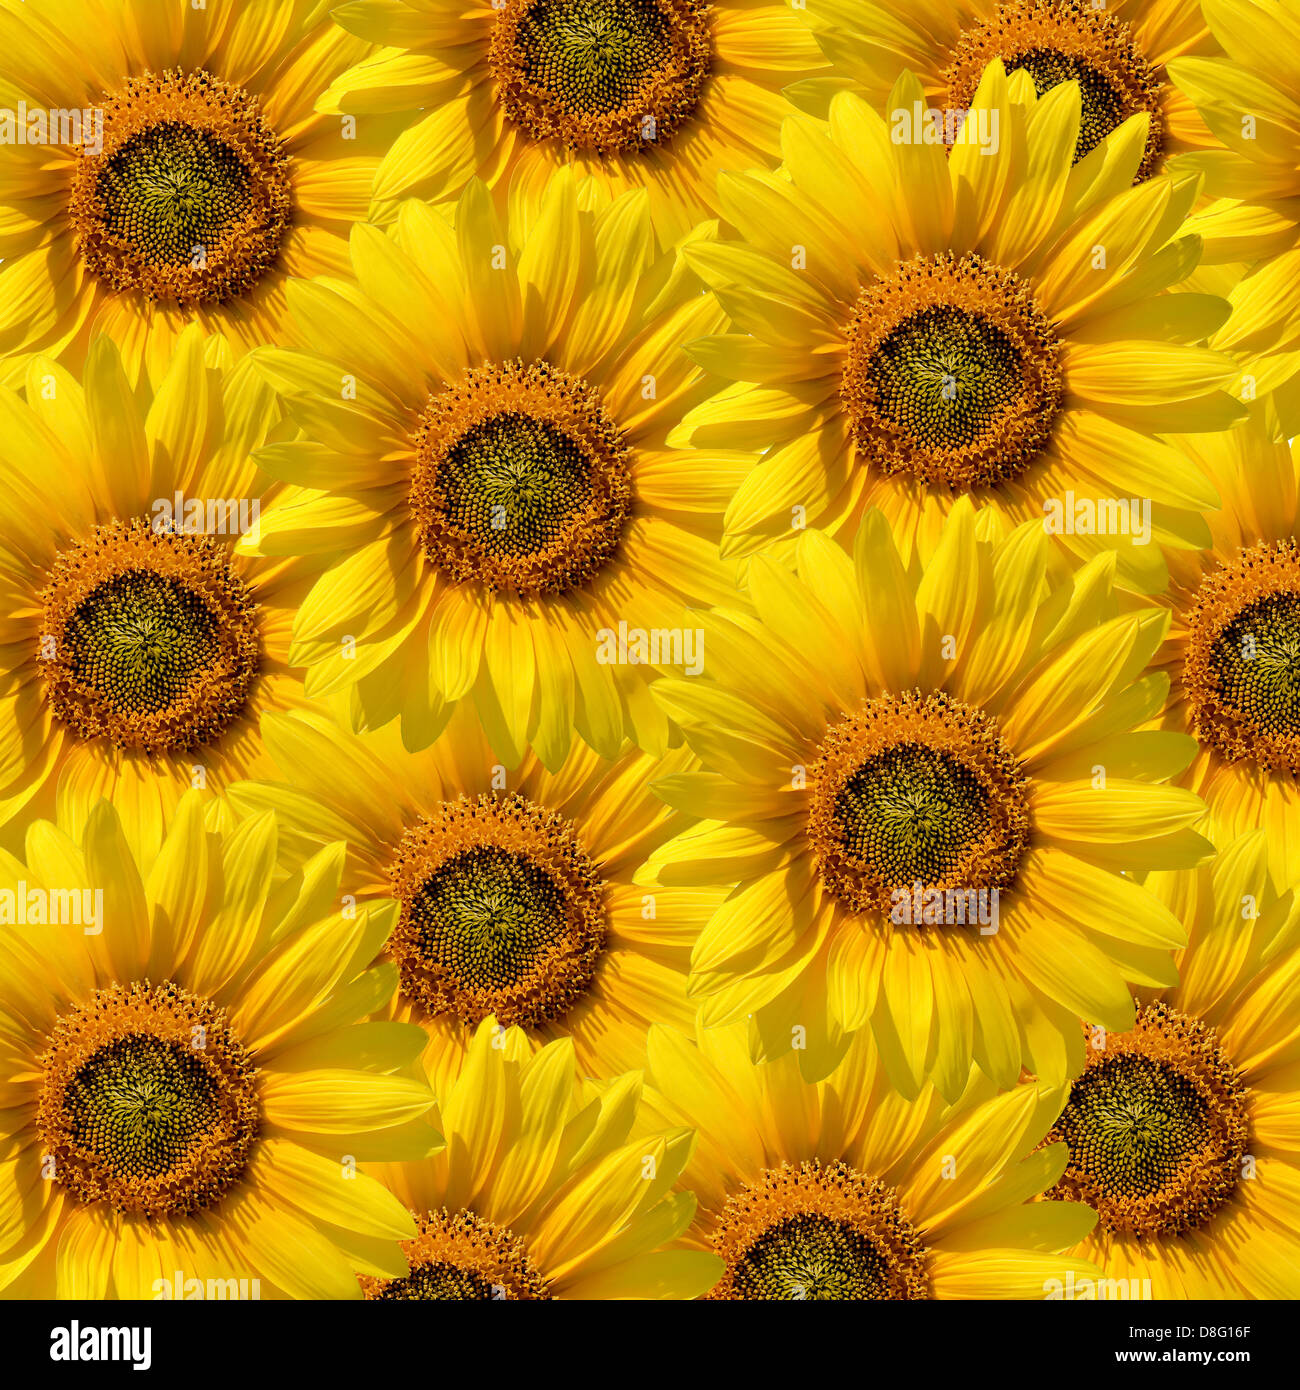 Sunflowers background Stock Photo